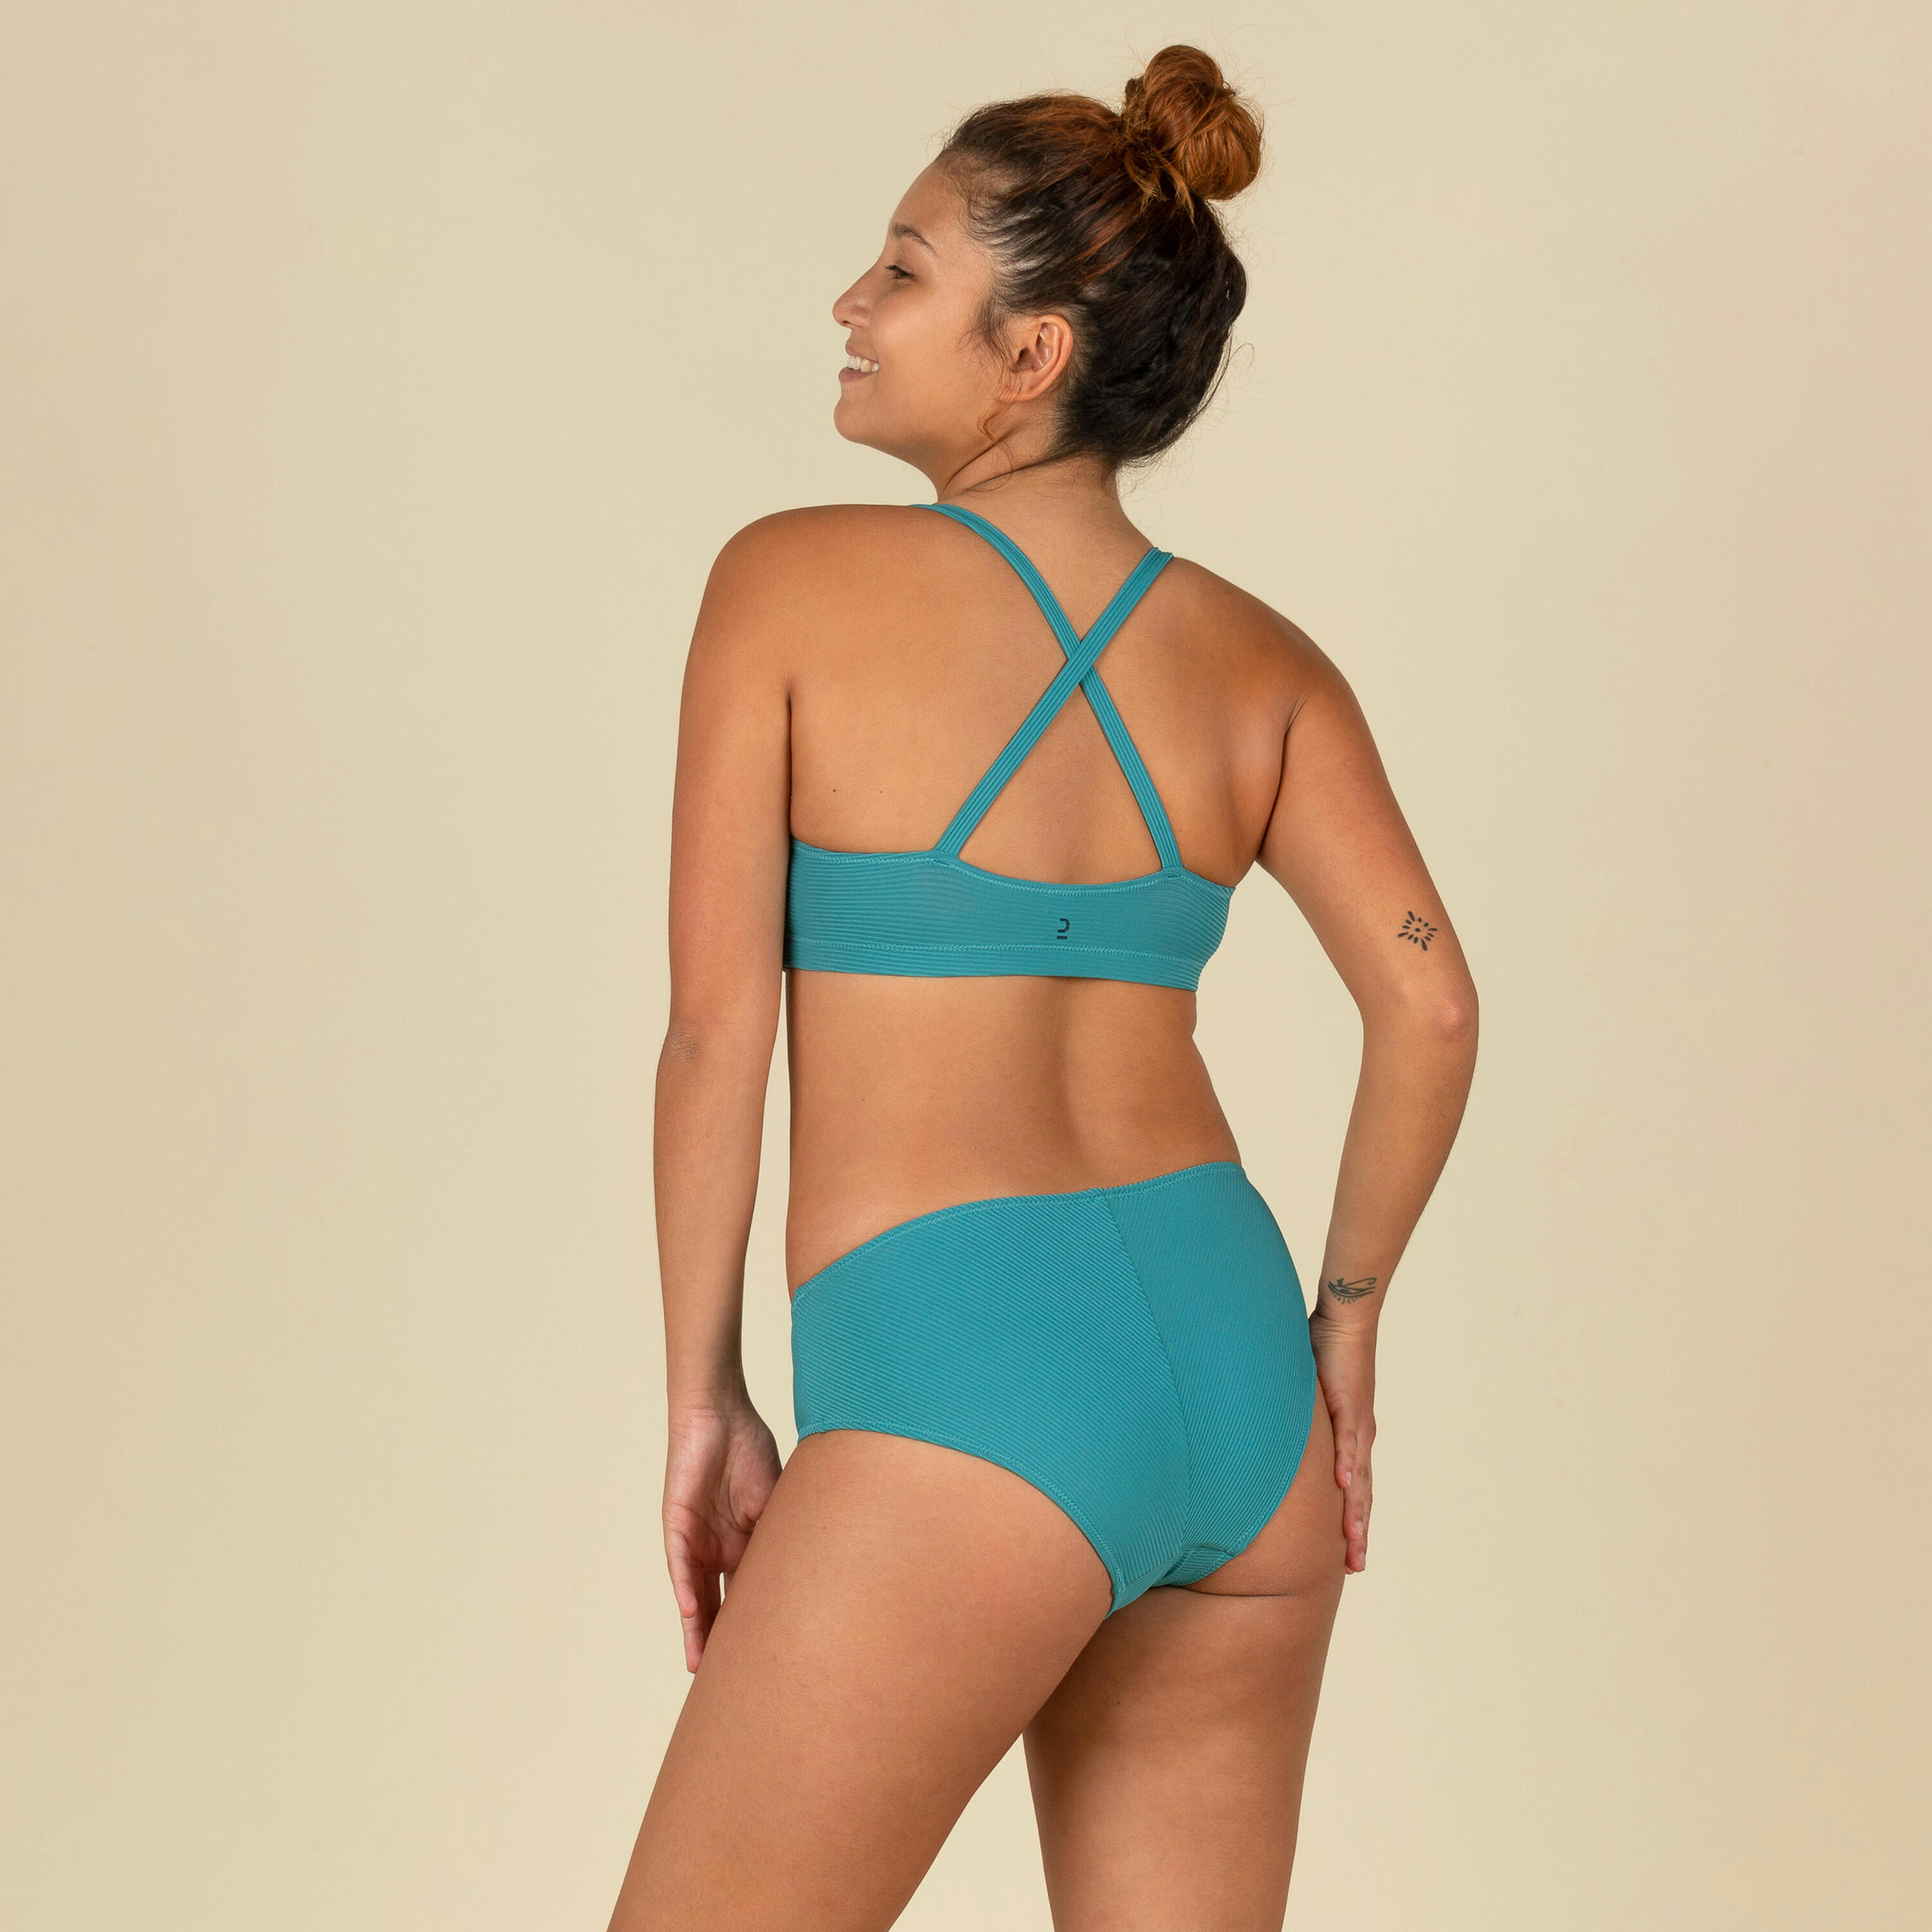 Women's Swimsuit Bottoms Lili Simy Blue green 5/6